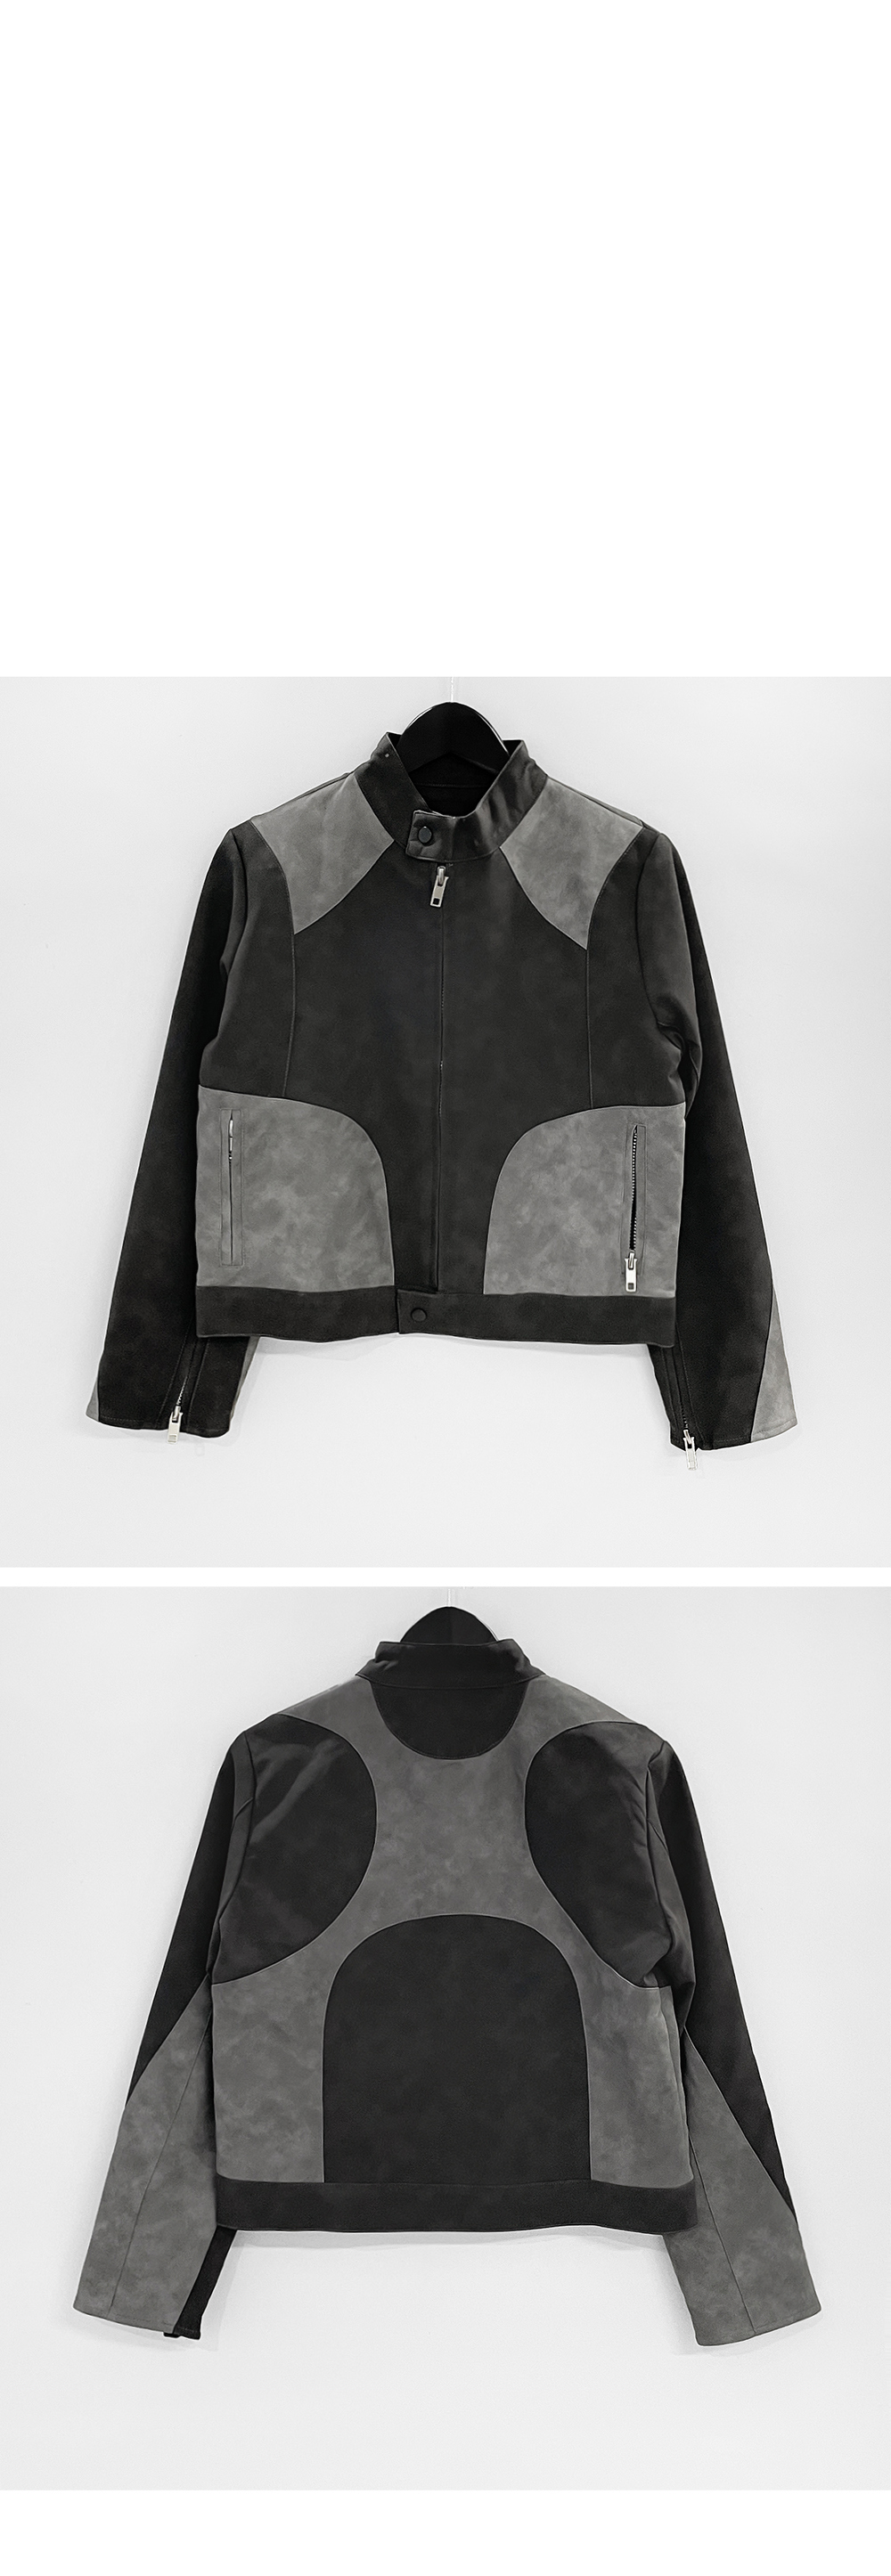 jacket charcoal color image-S1L10